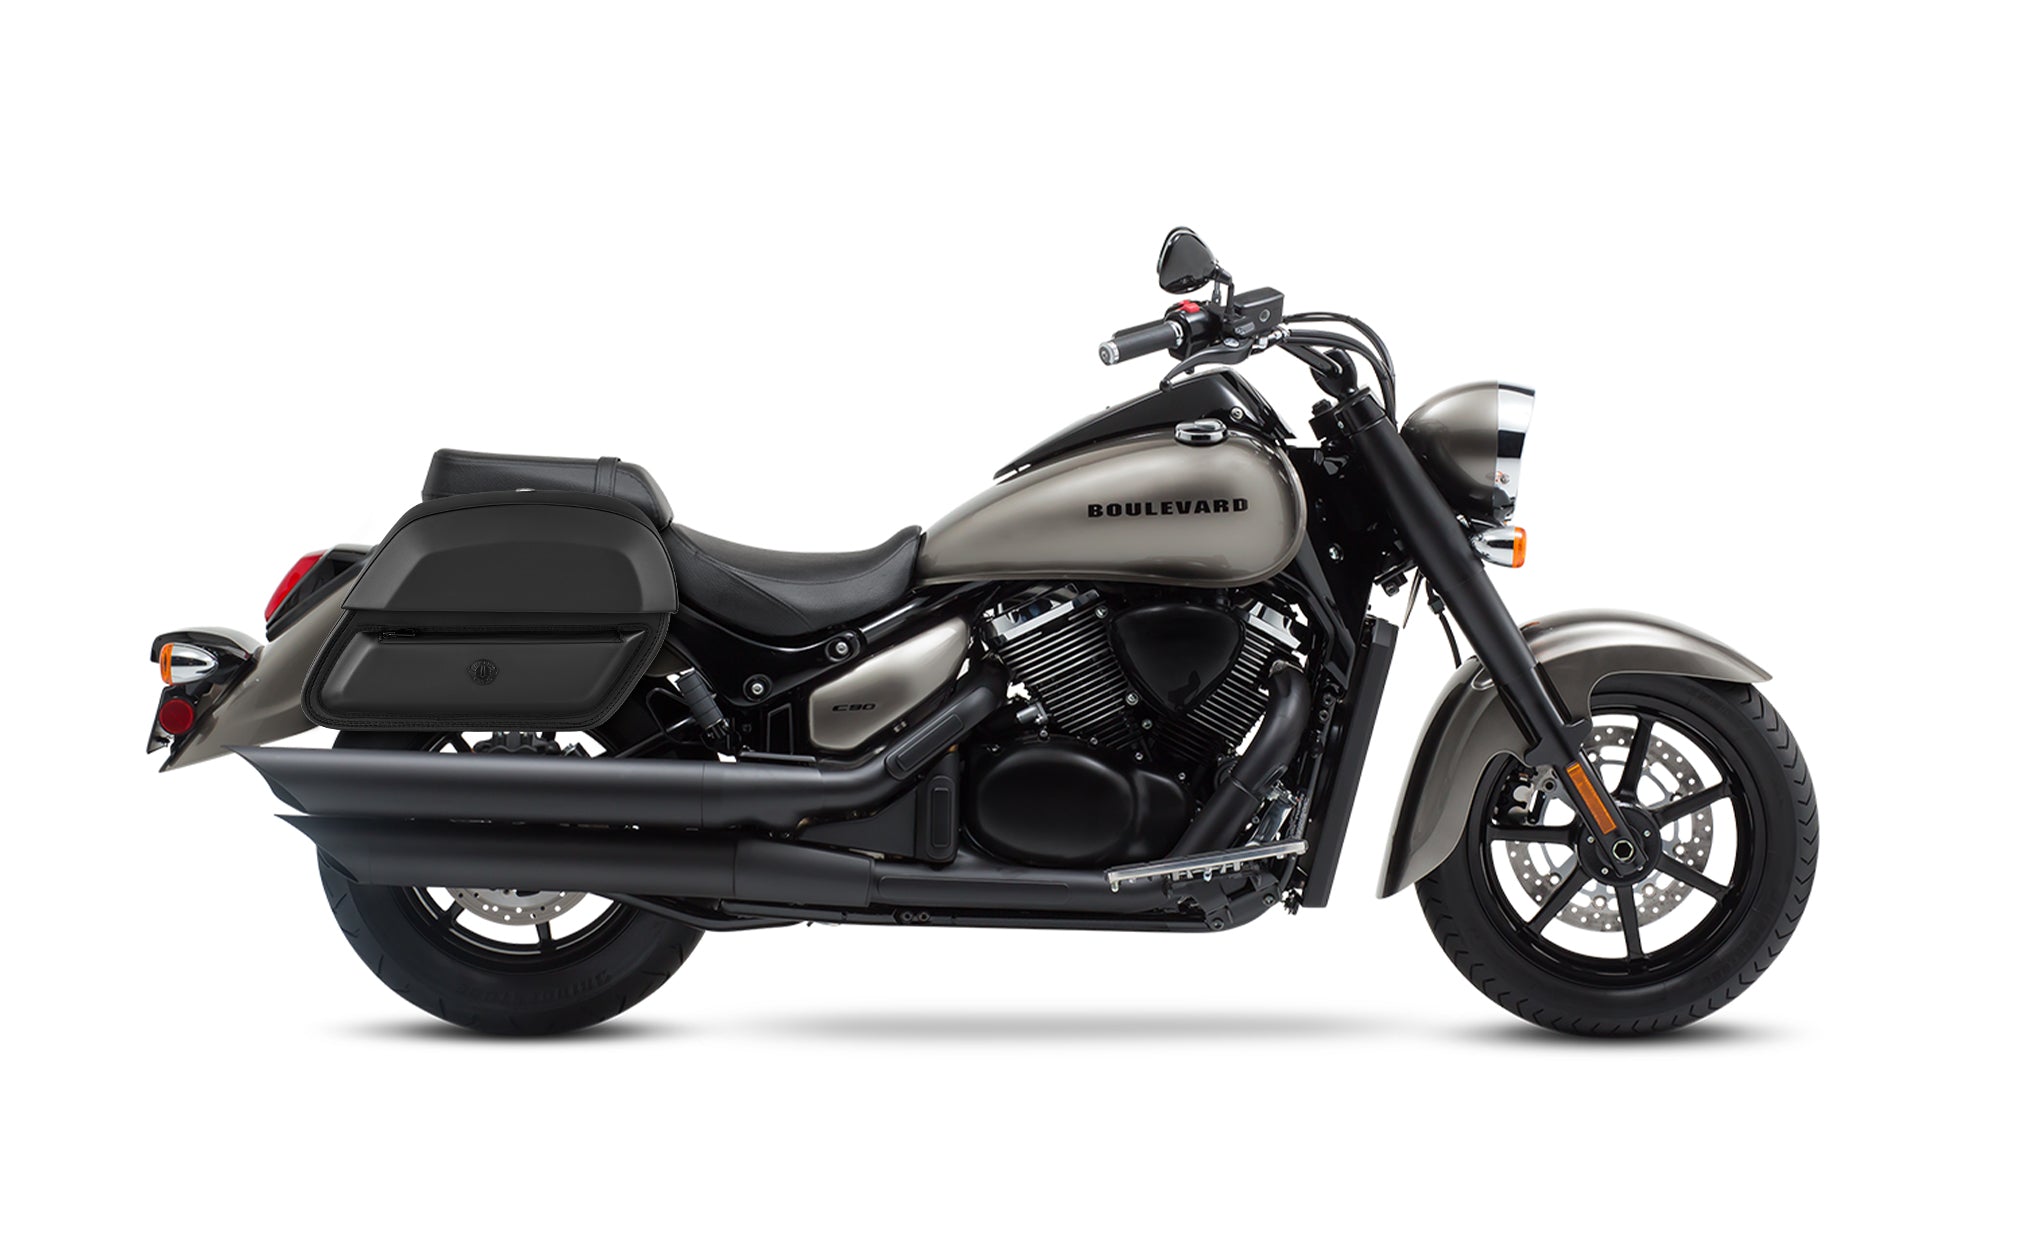 28L - Wraith Medium Suzuki Boulevard C90 VL1500 Leather Motorcycle Saddlebags BAG on Bike View @expand